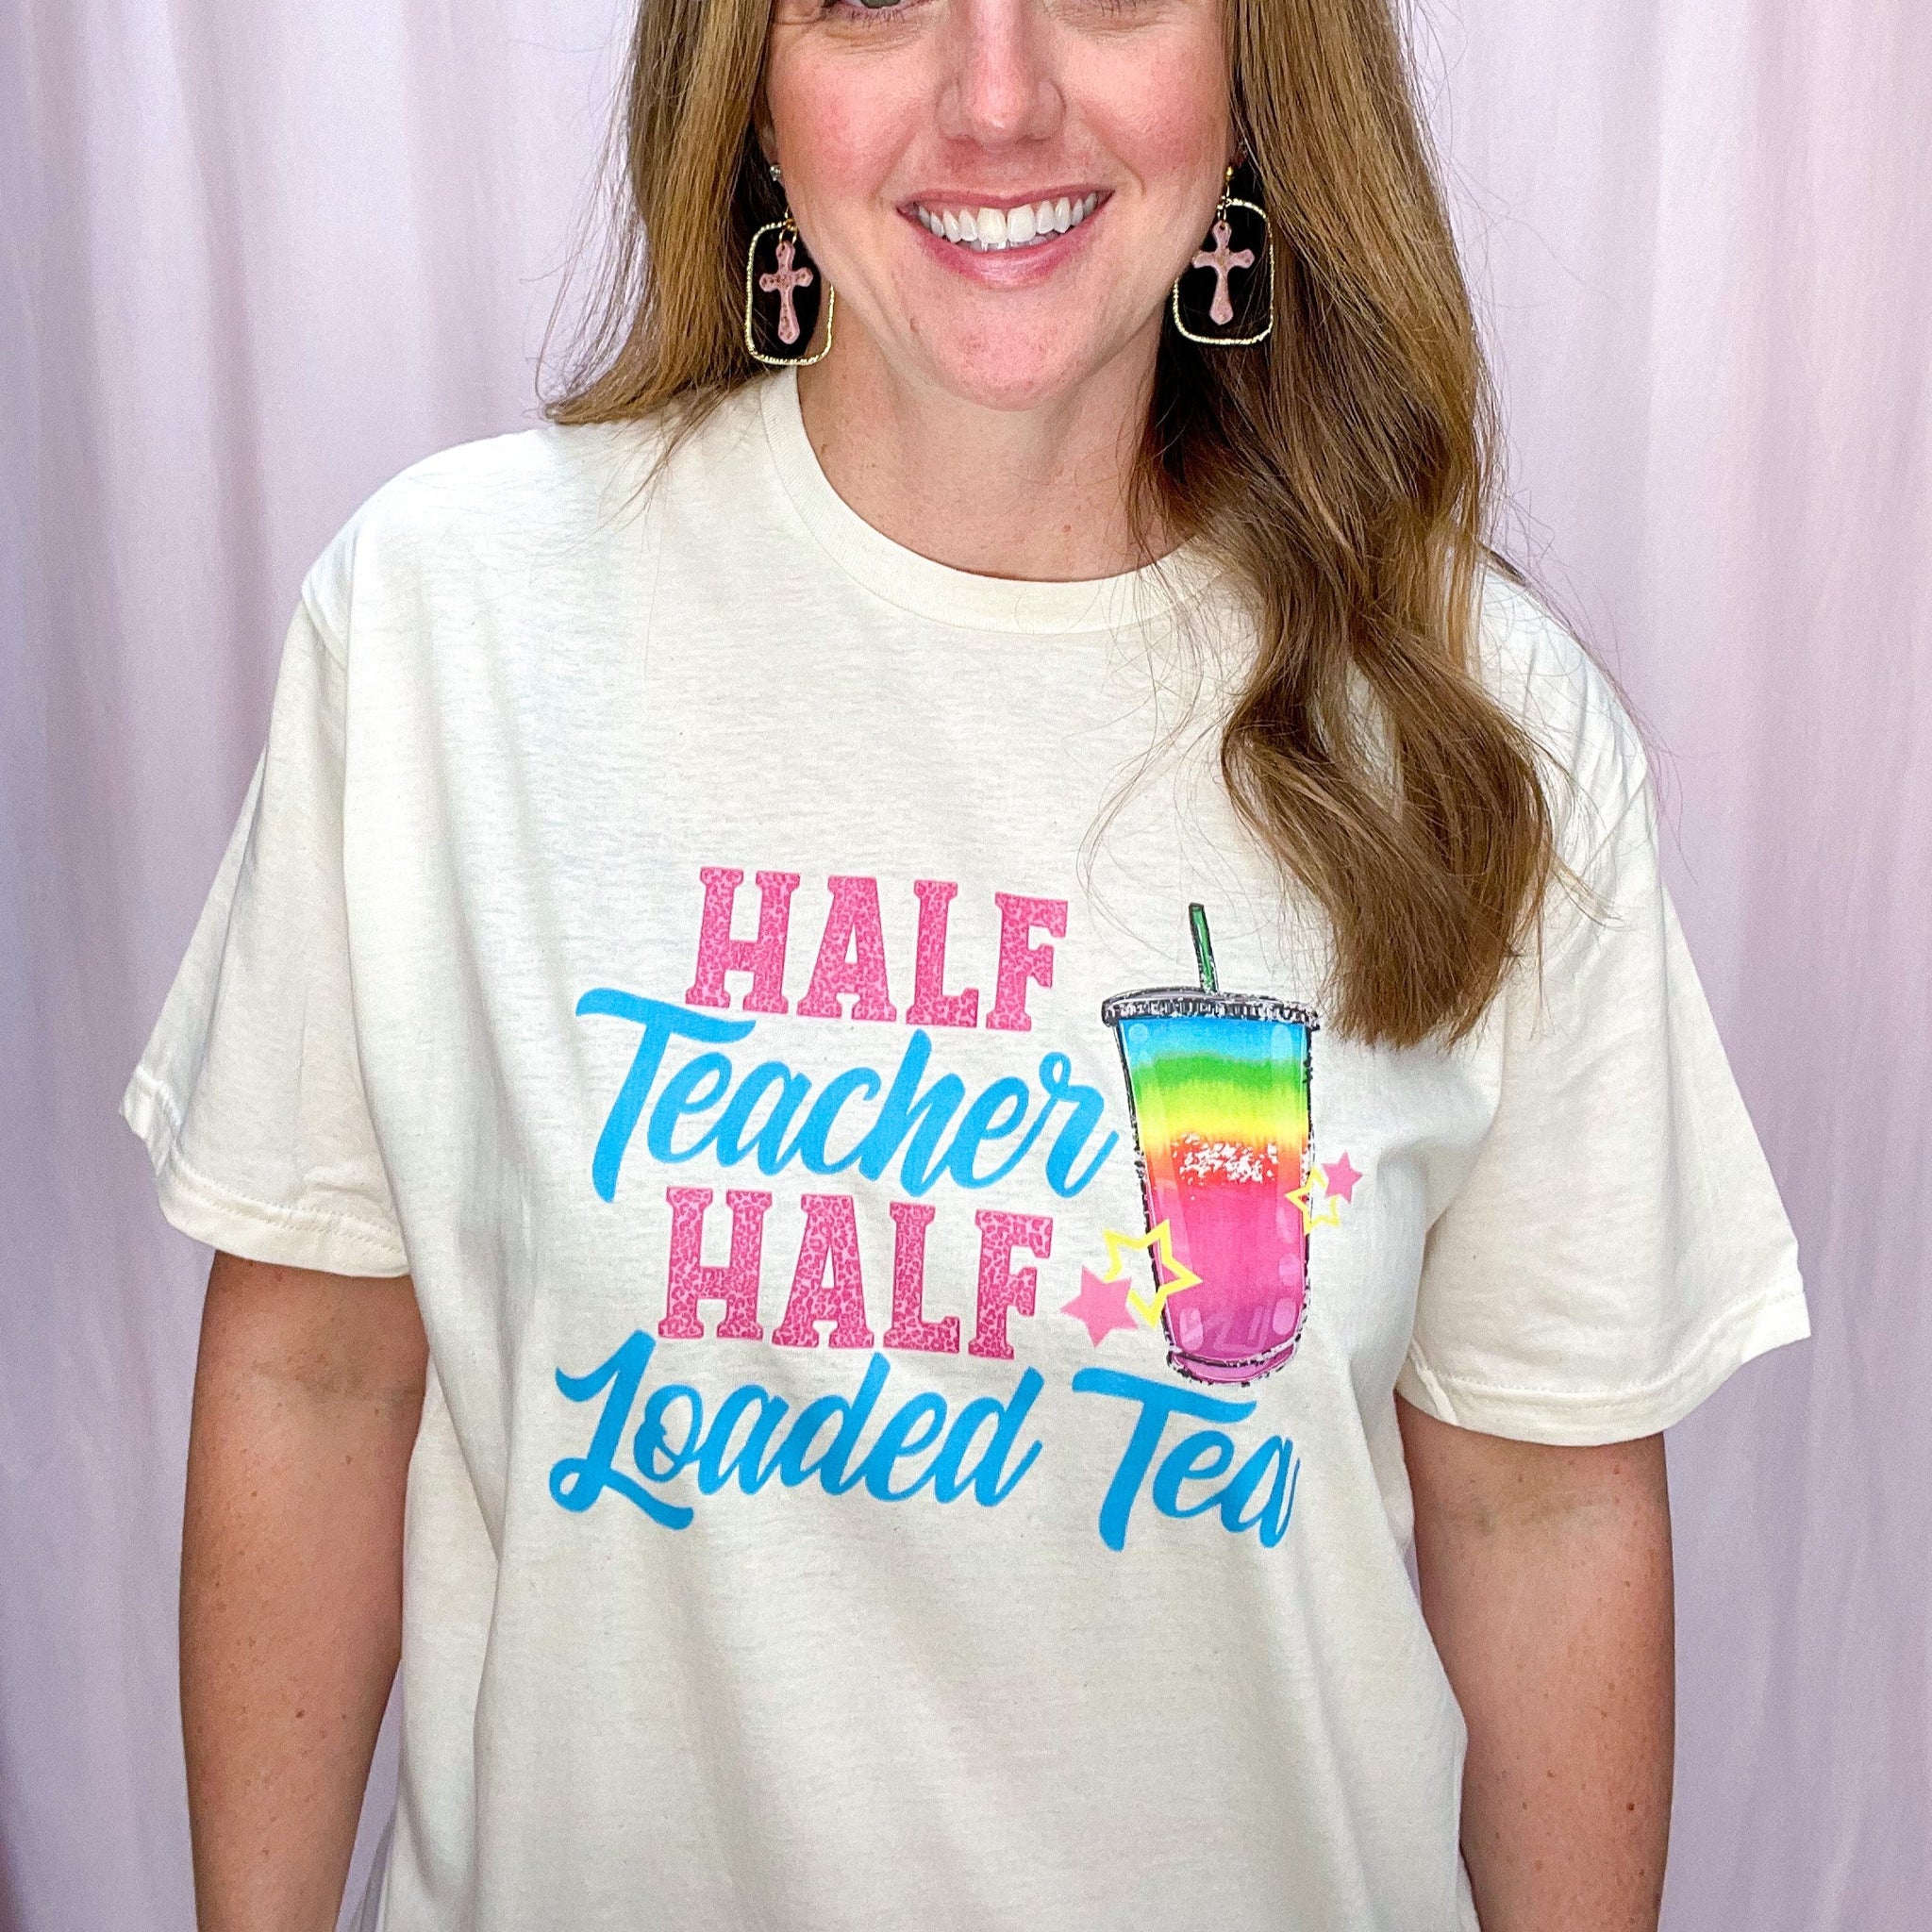 Half Teacher Half Loaded Tea, Nautral Bella Canvas Tshirt with Blue Text 725